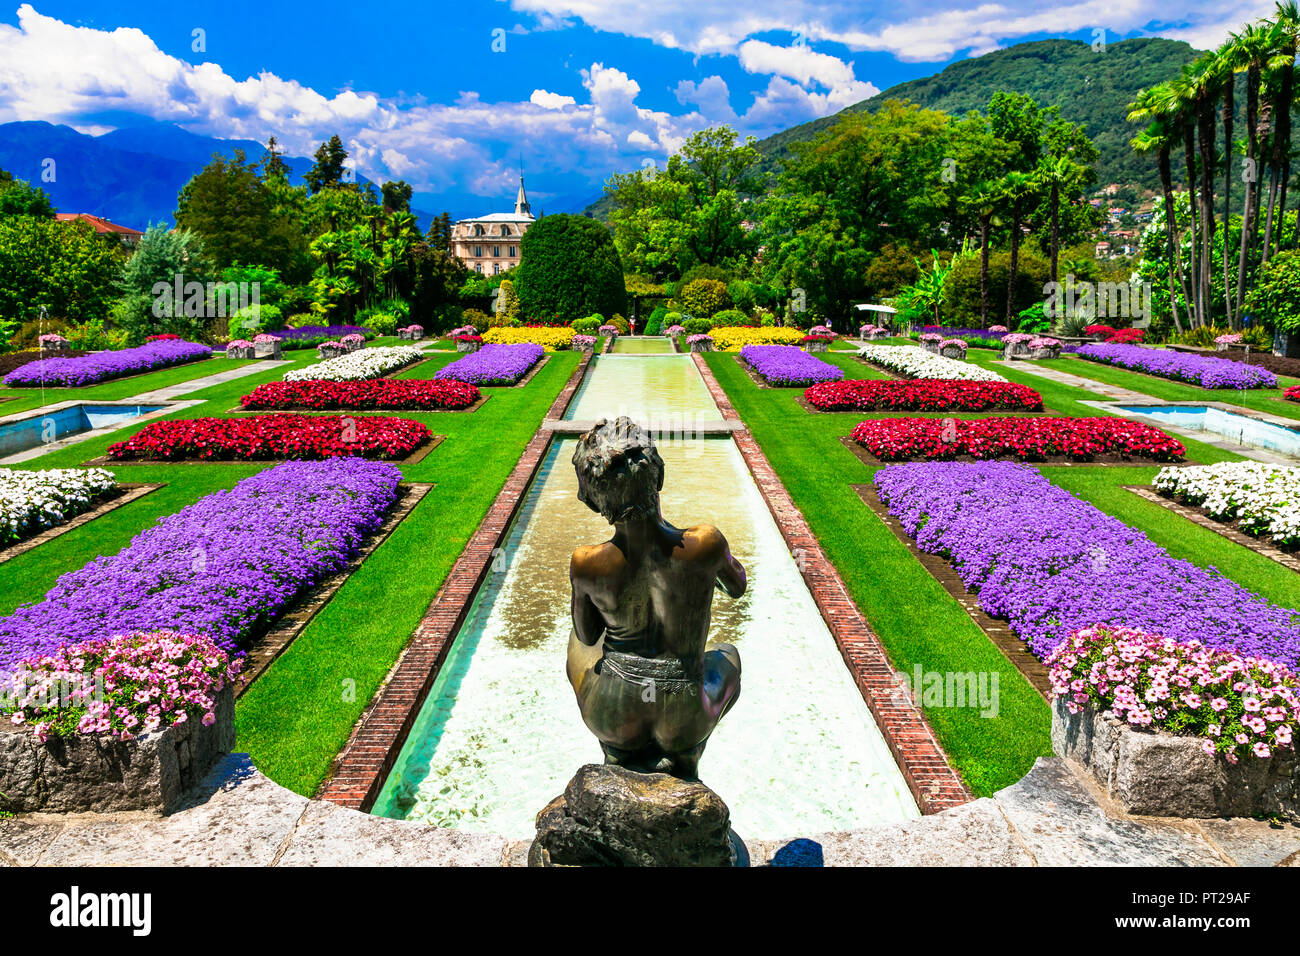 Beautiful Villa Taranto,view with beautiful gardens and flowers,Lake Maggiore,North Italy. Stock Photo